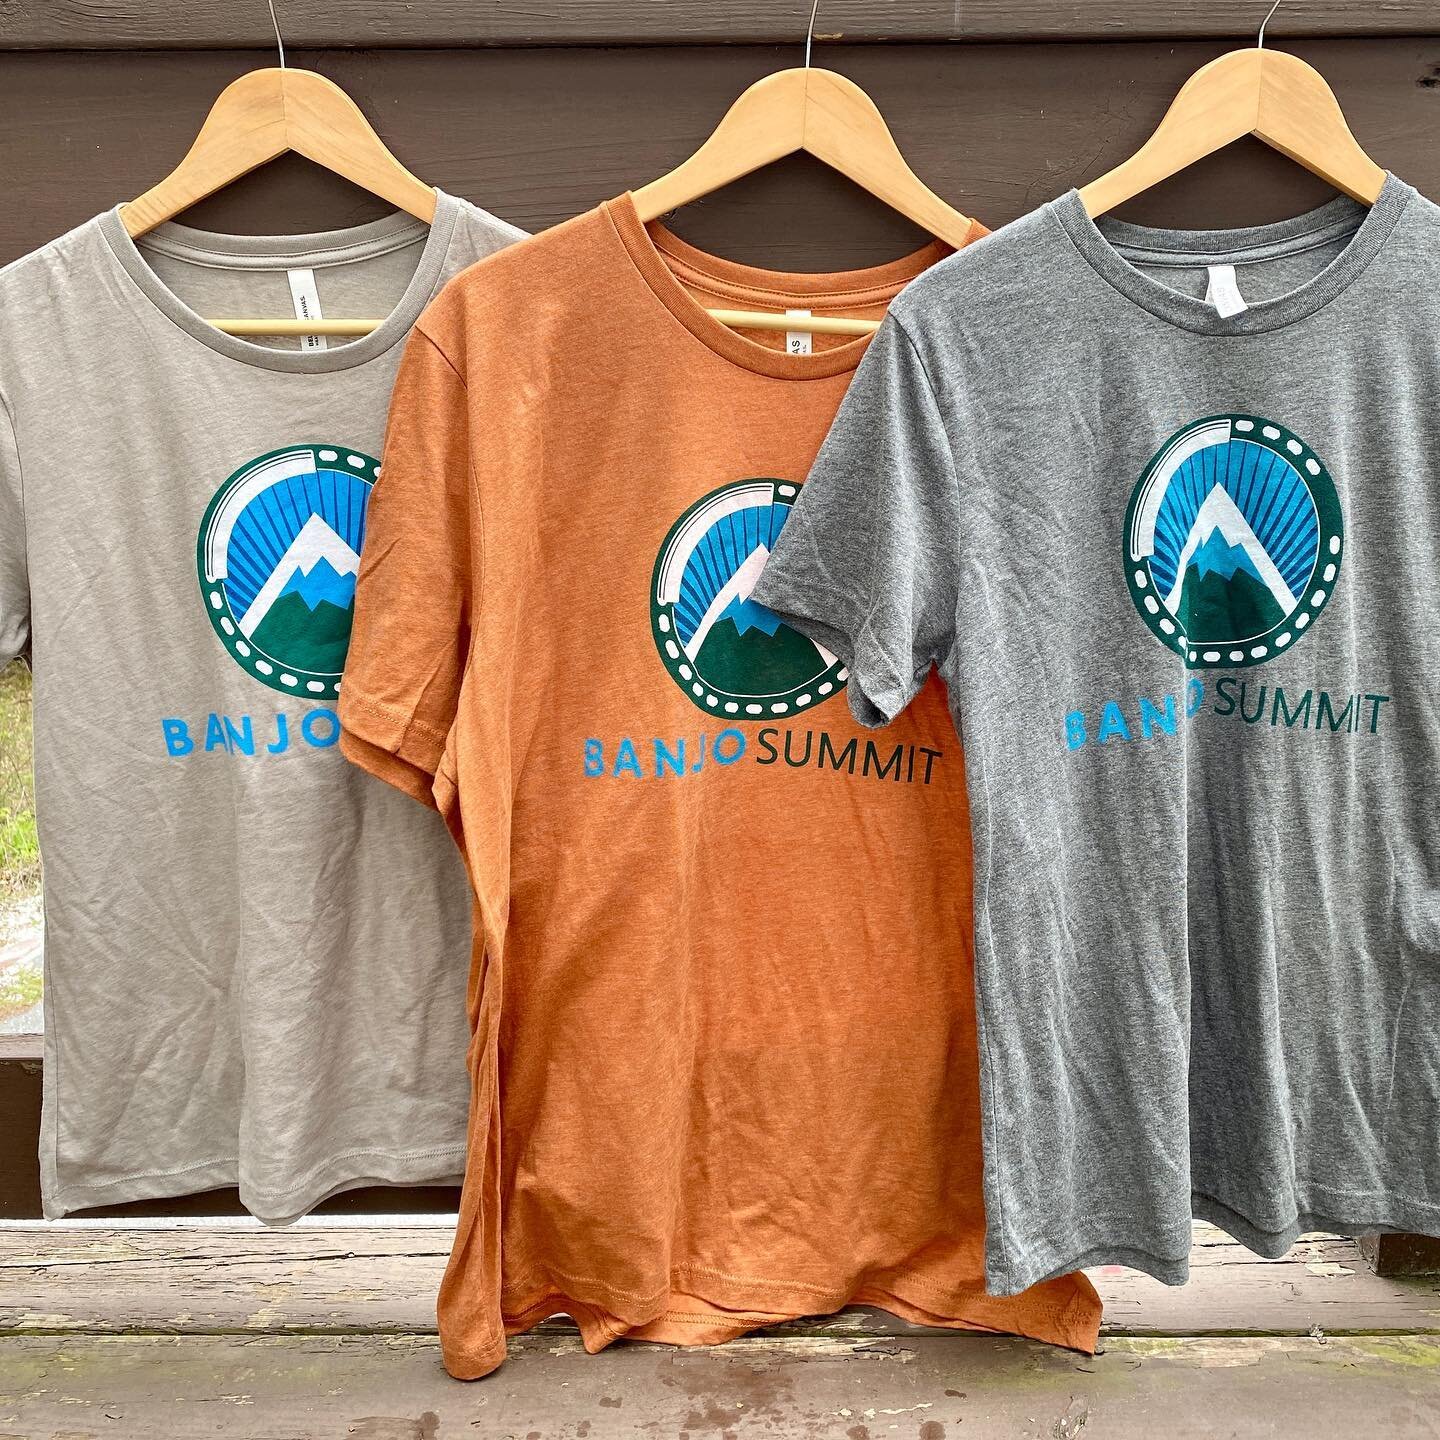 New Banjo Summit shirts arrived. As cool as these are, the actual Banjo Summit Online will be 1000x better. Sign up now! (Link in bio).
.
.
.
.
With @benkrakauer @tradplus @jaymestone @belafleckbanjo @wesleycorbett @eligilbertbanjo @seamus_egan_proje